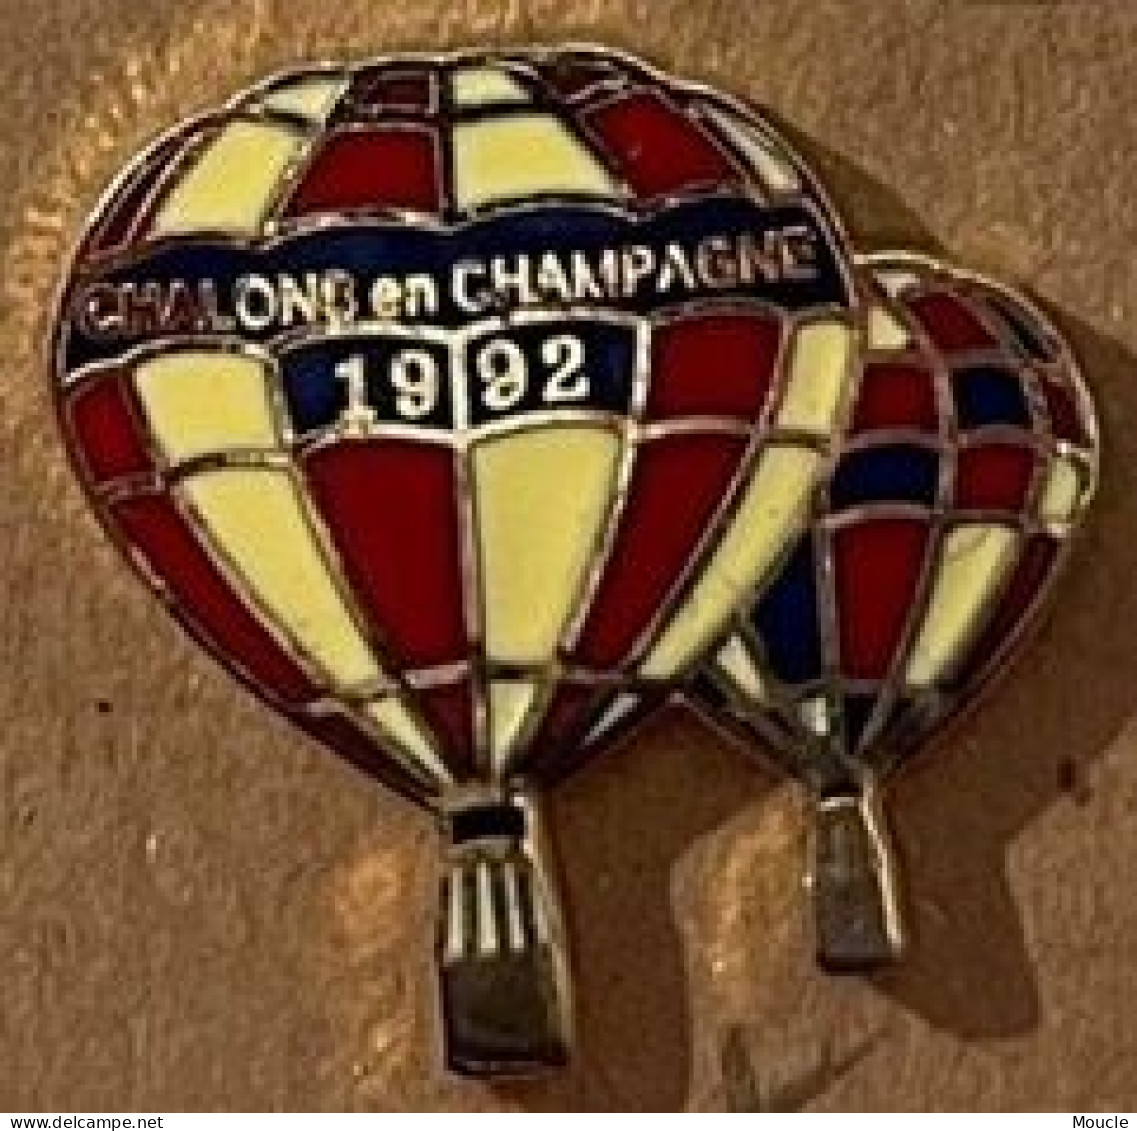 MONTGOLFIERE - BALLOON - BALLON A AIR CHAUD - CHALONS EN CHAMPAGNE 1992 -             (33) - Luchtballons